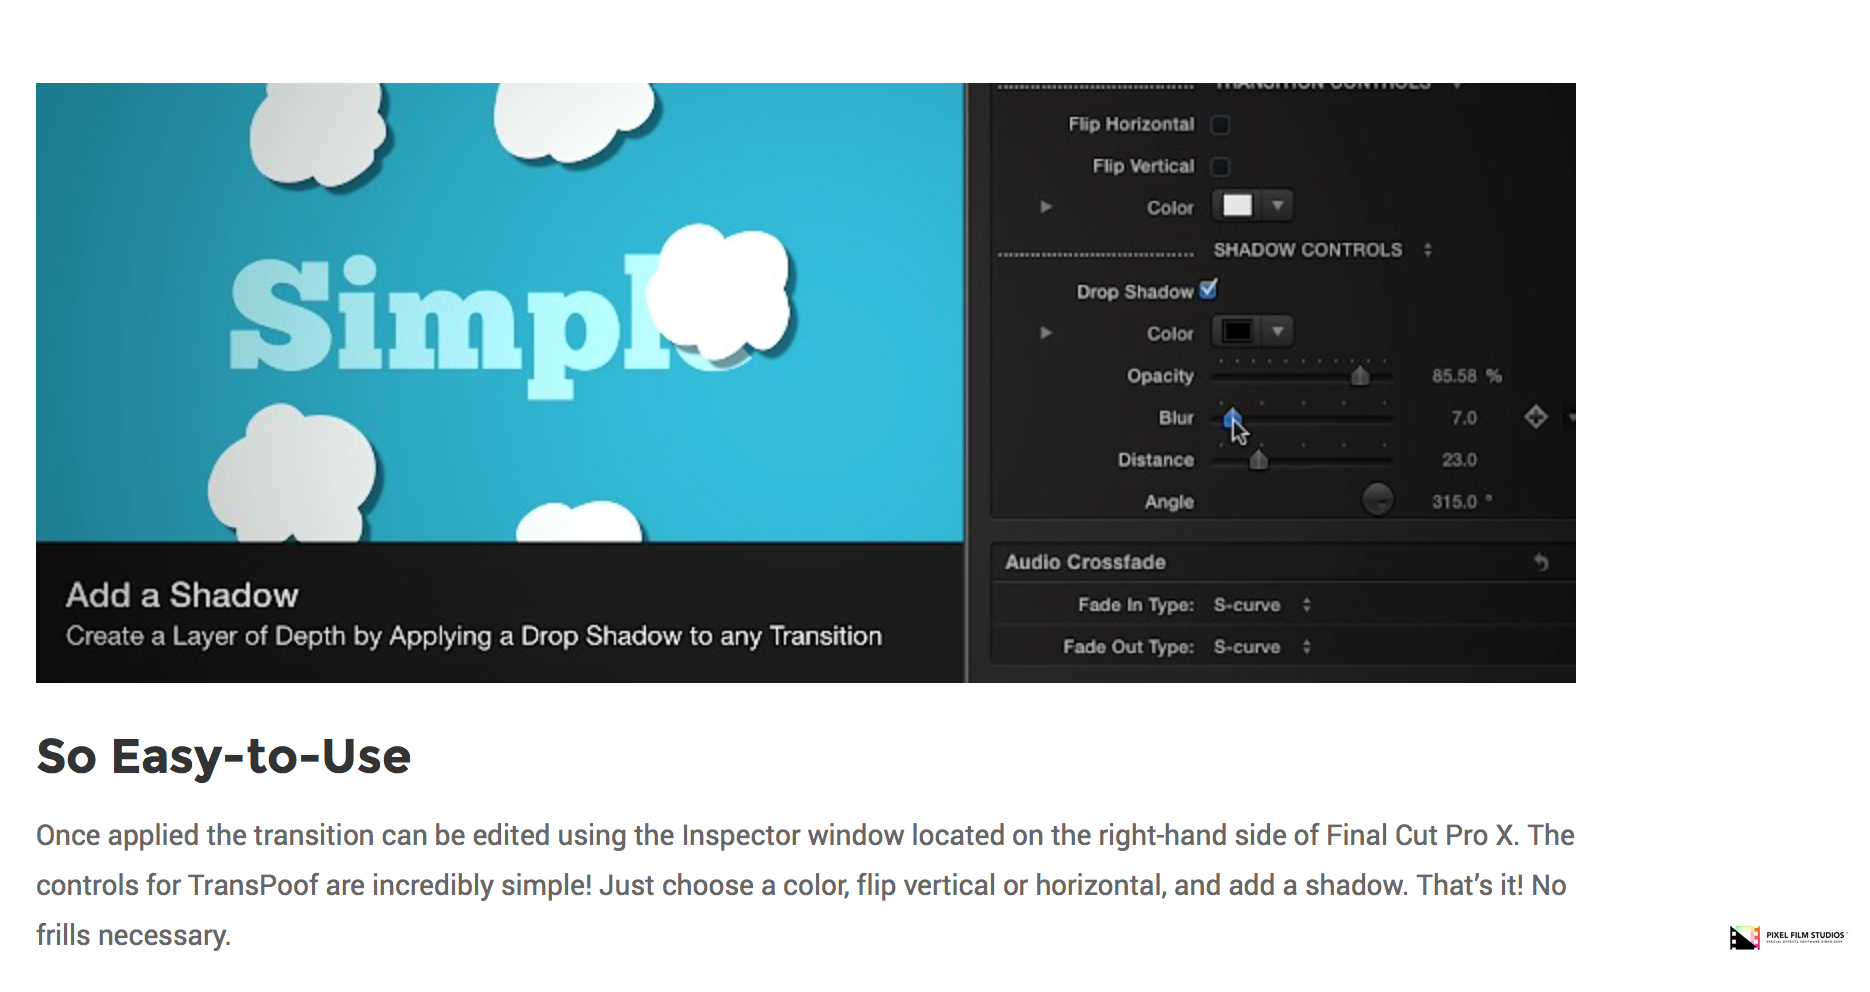 TransPoof - Final Cut Pro X - Pixel Film Studios Plugin